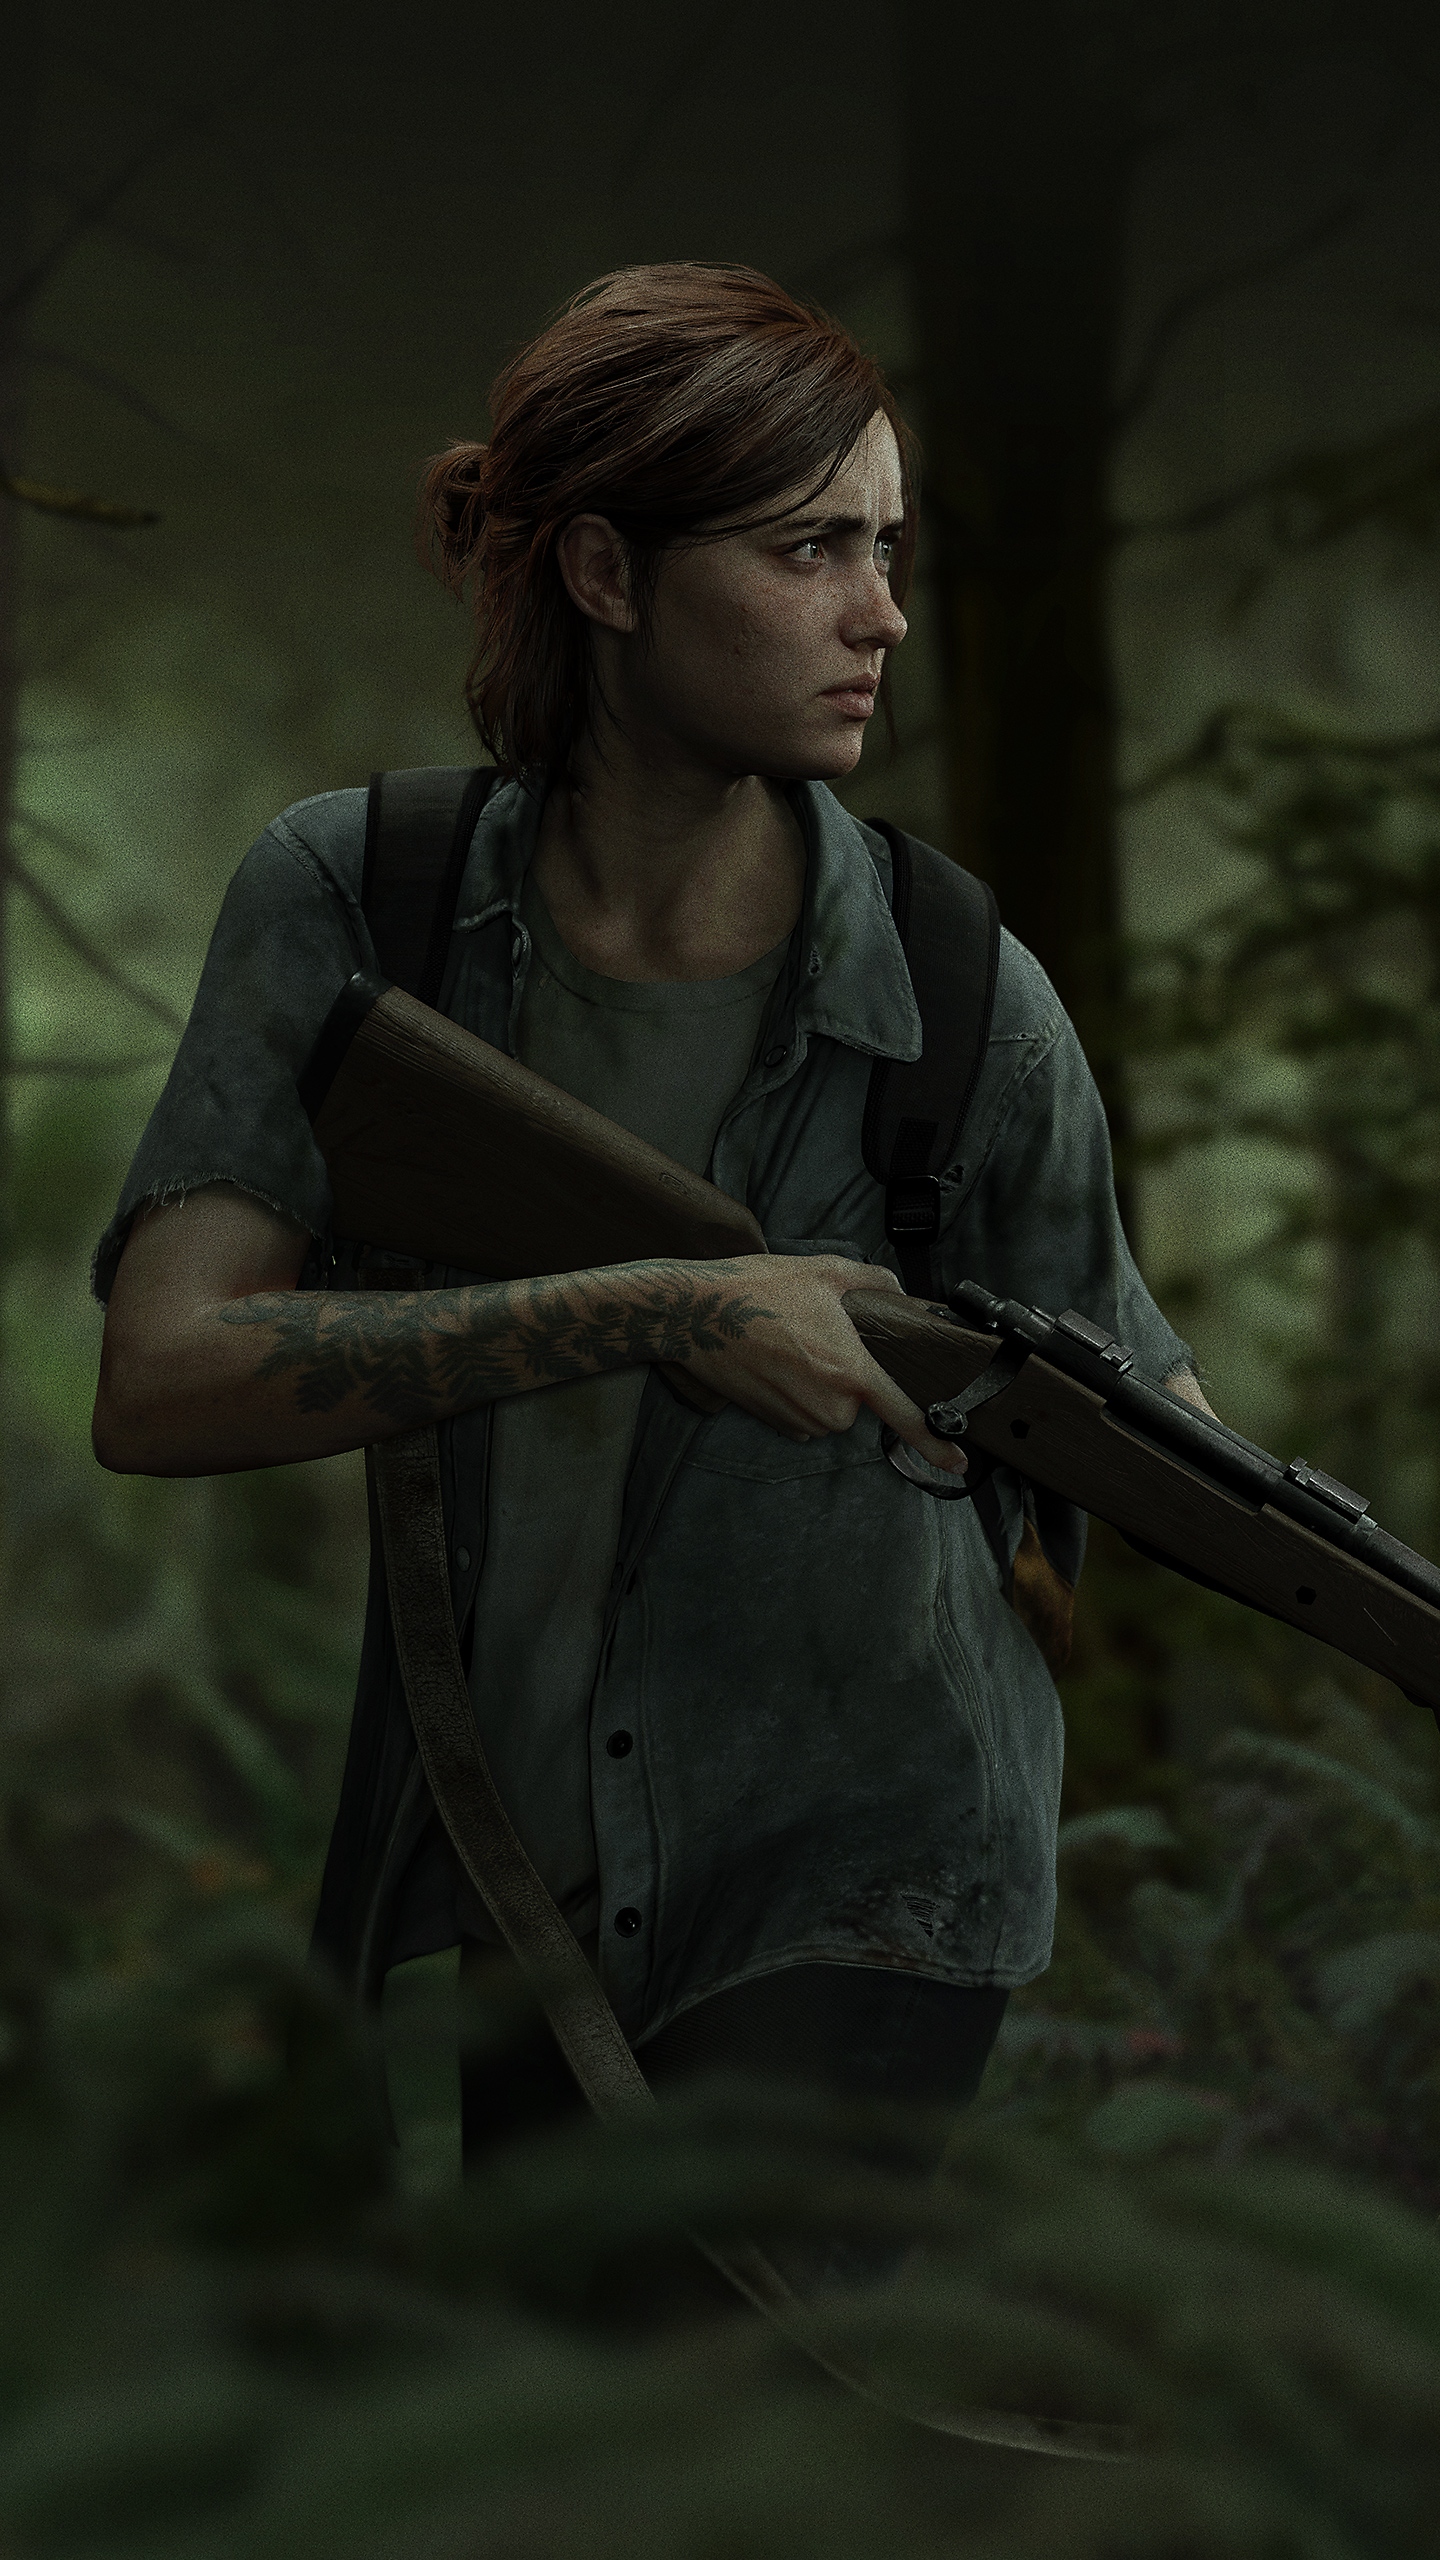 Outbreak Day 2018 للعبة The Last of Us Part II - جوال Google Pixel